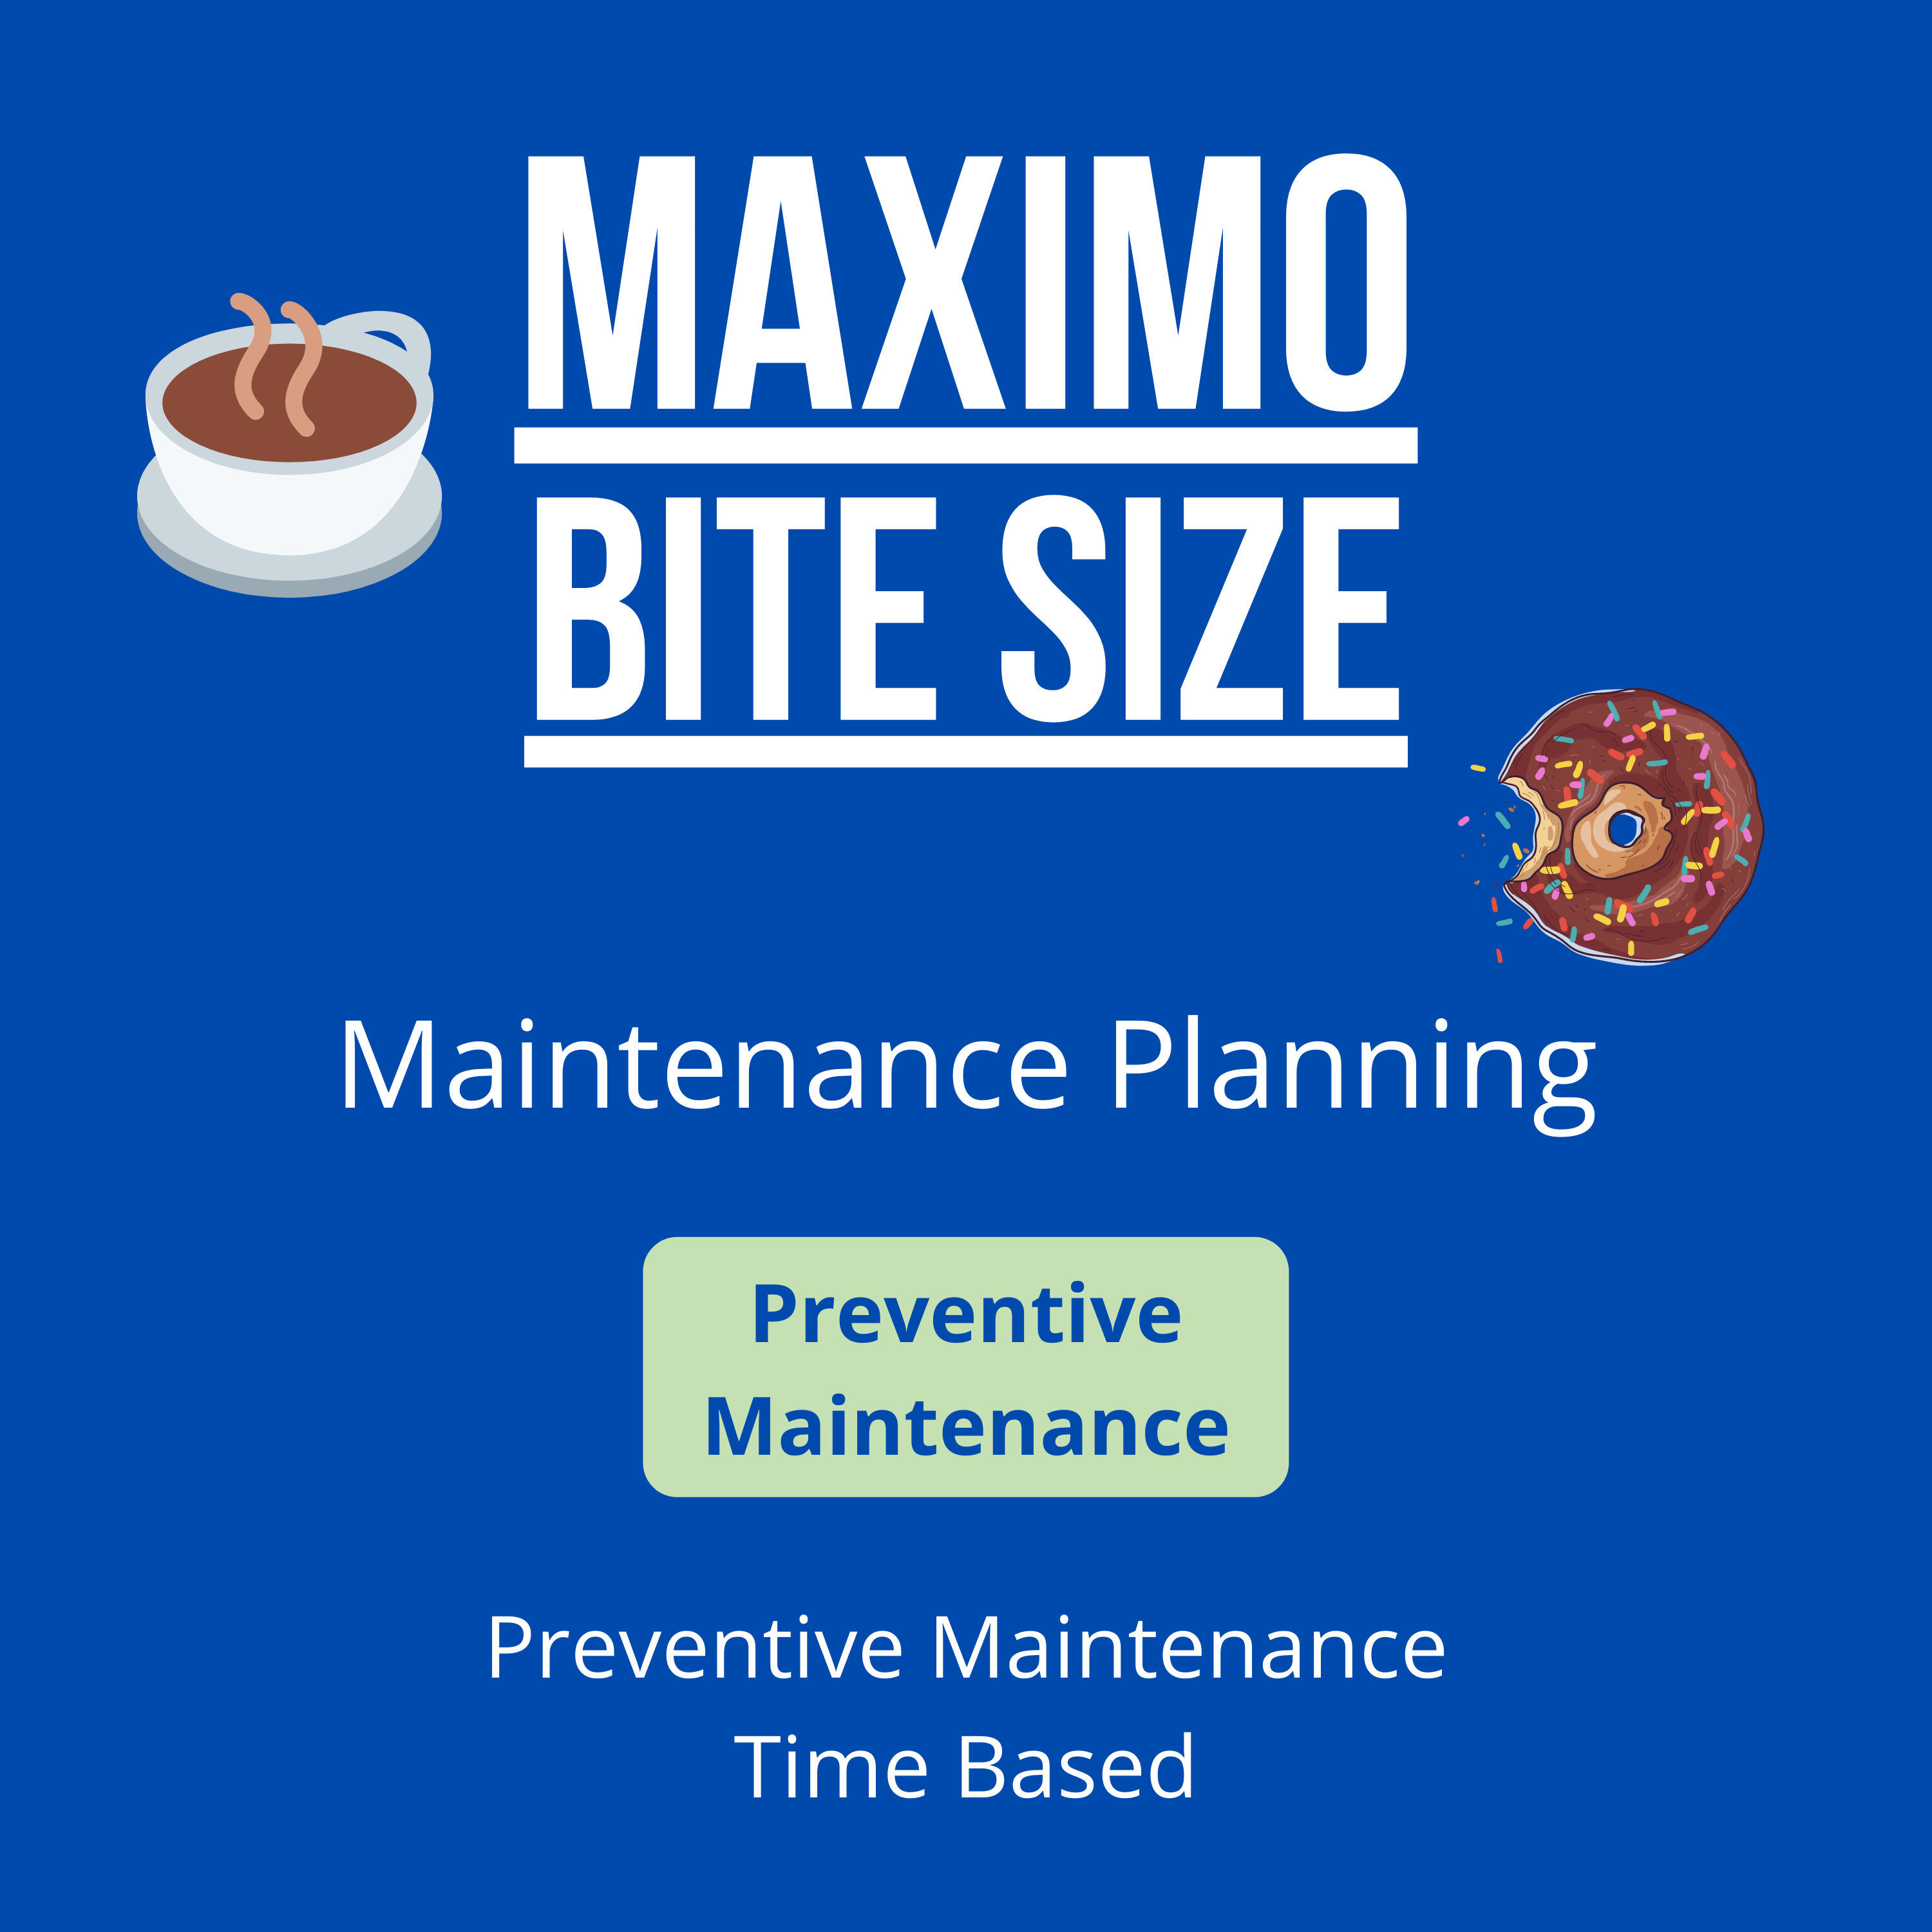 Preventive Maintenance – Time Based